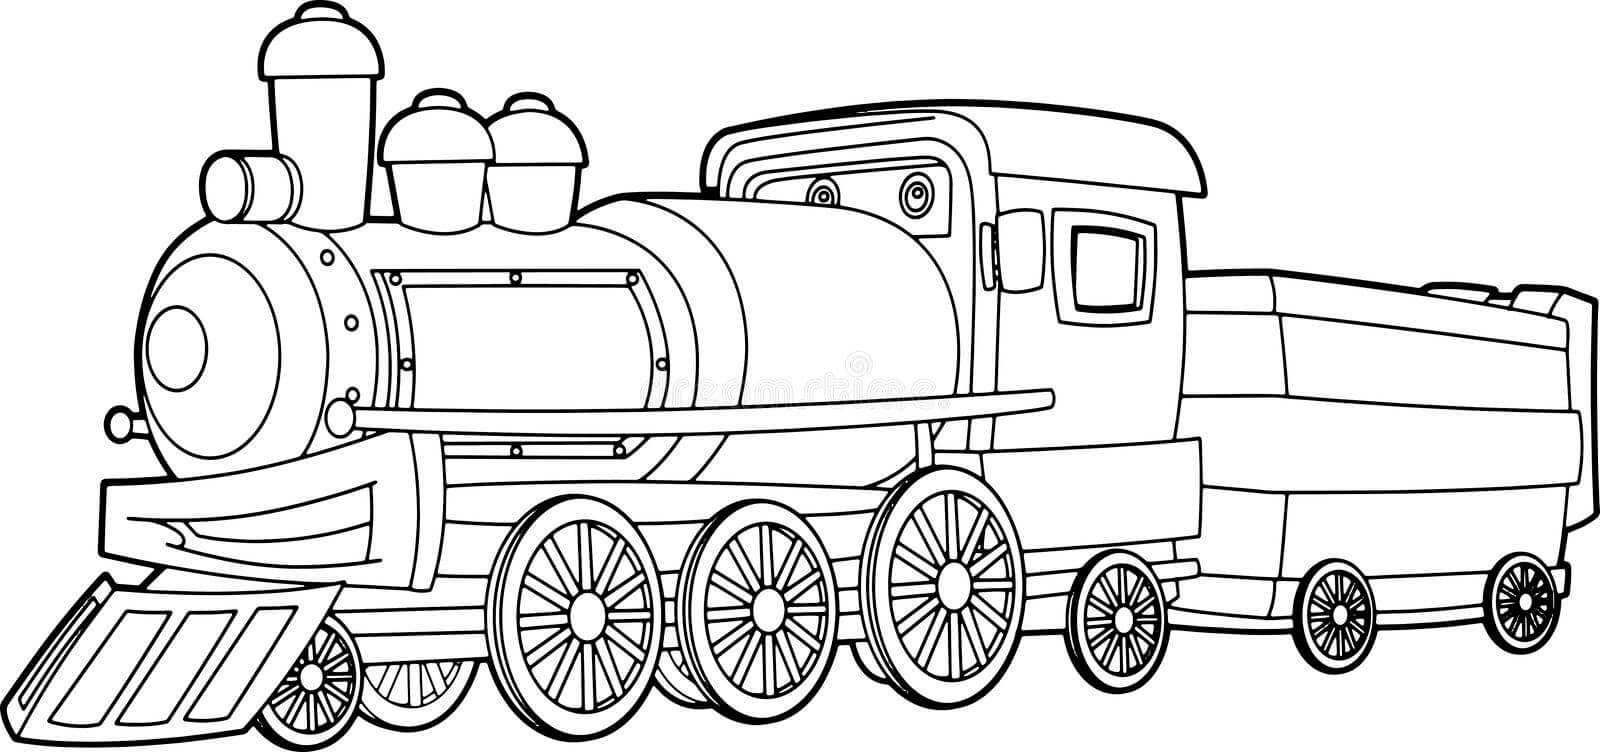 Un Train coloring page